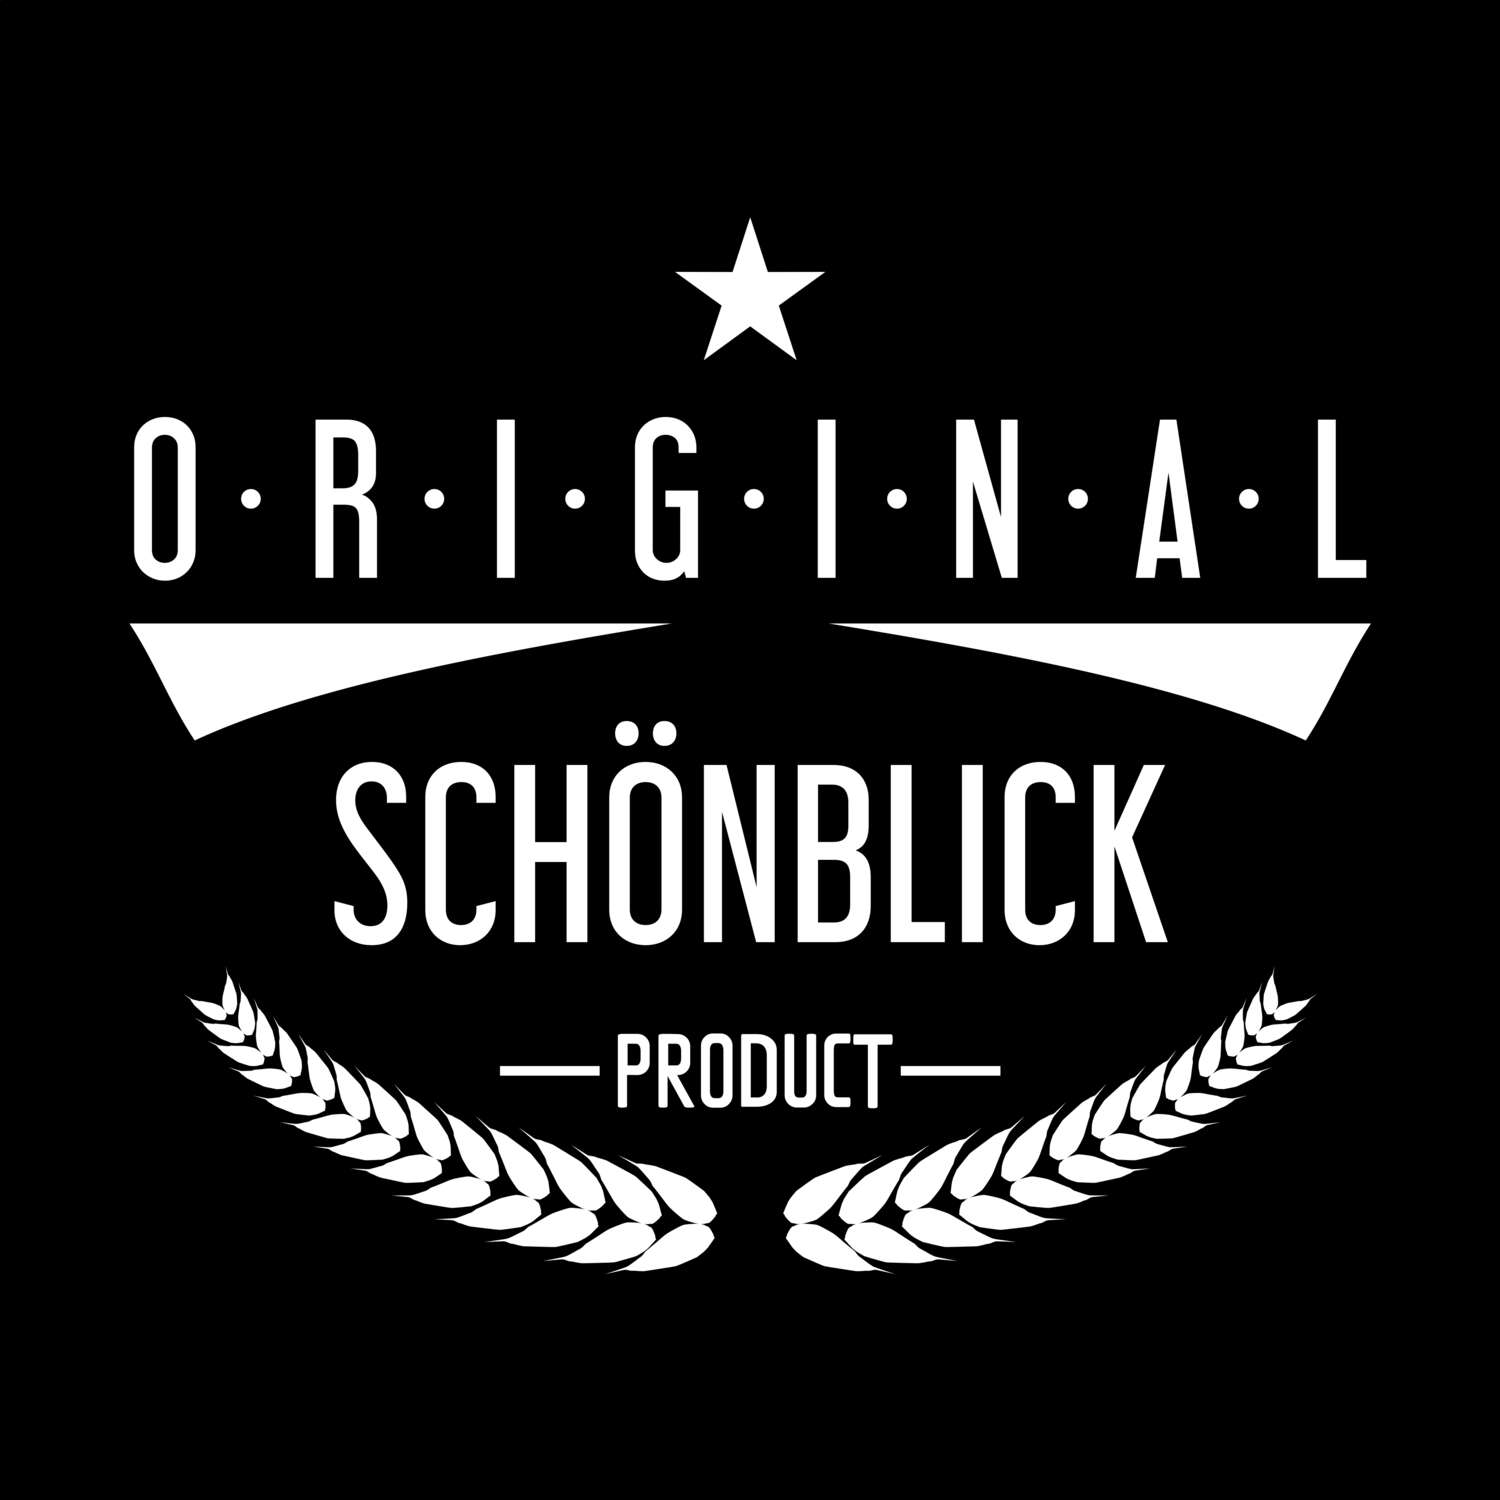 Schönblick T-Shirt »Original Product«